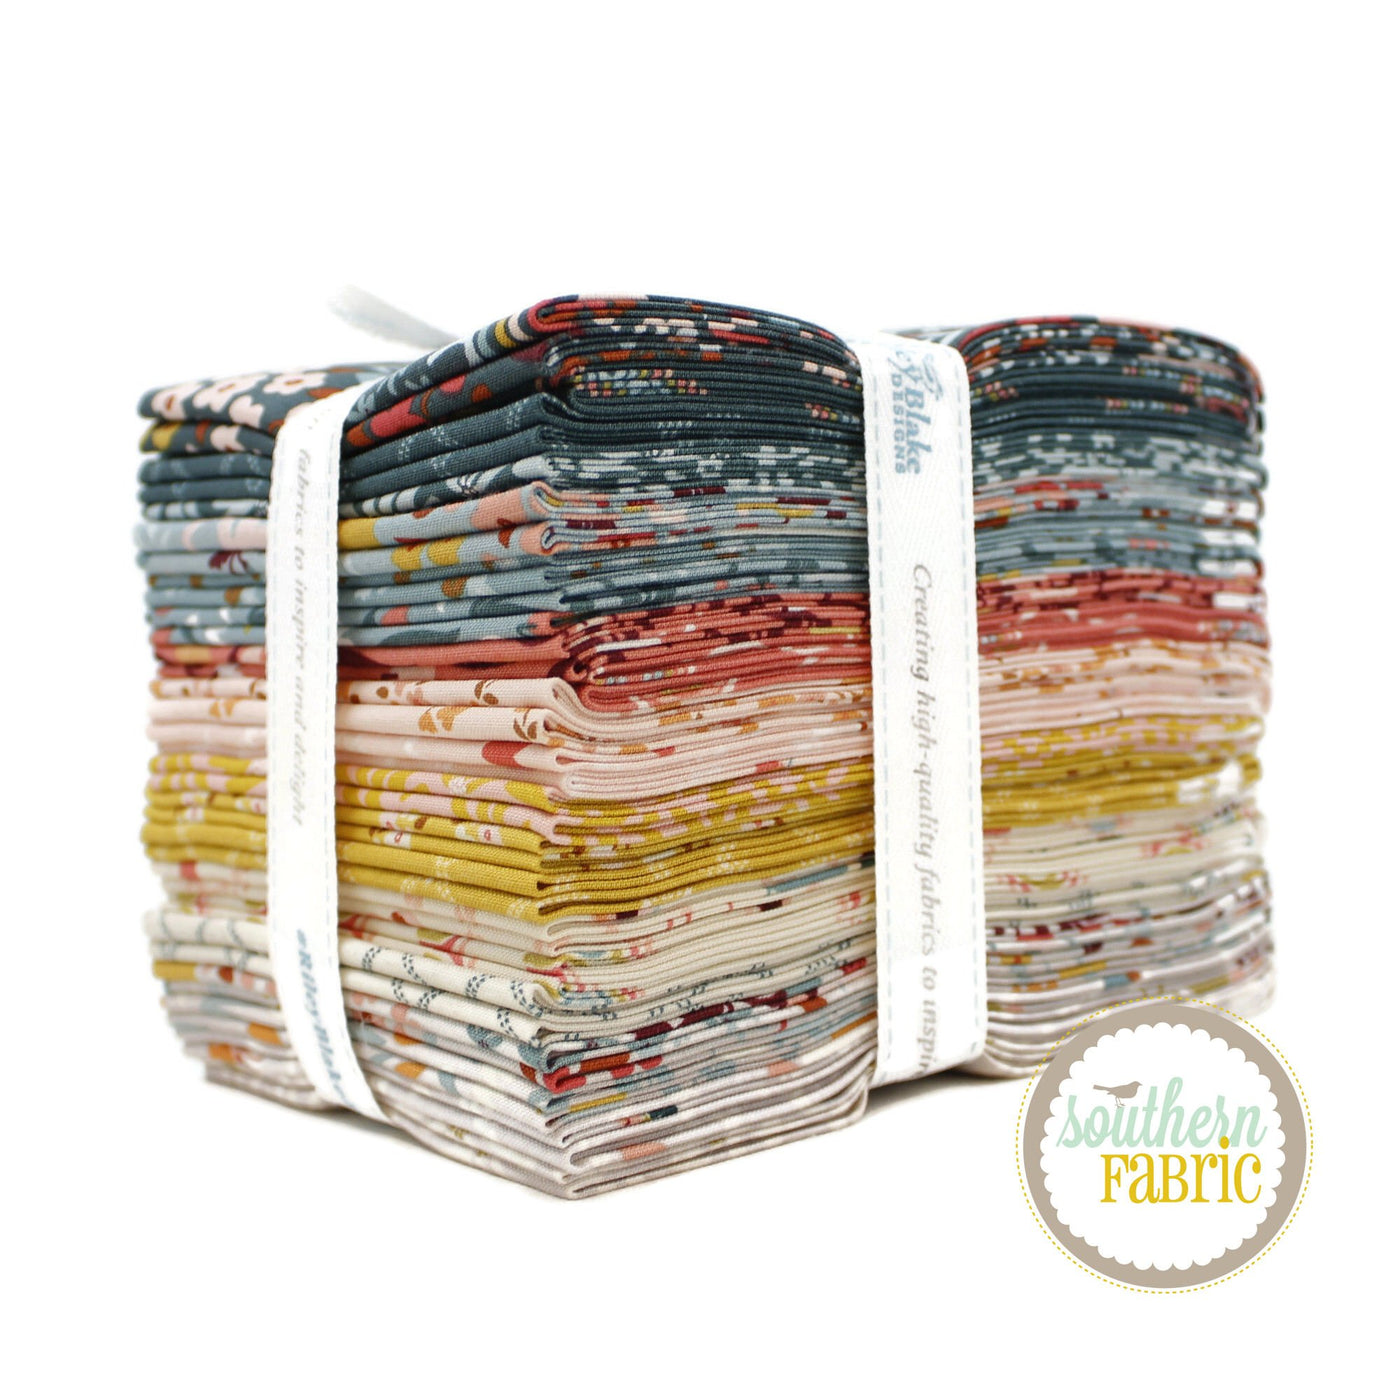 Fairy Dust Fat Quarter Bundle (21 pcs) by Ashley Collett Design for Riley Blake (FQ-12440-21)